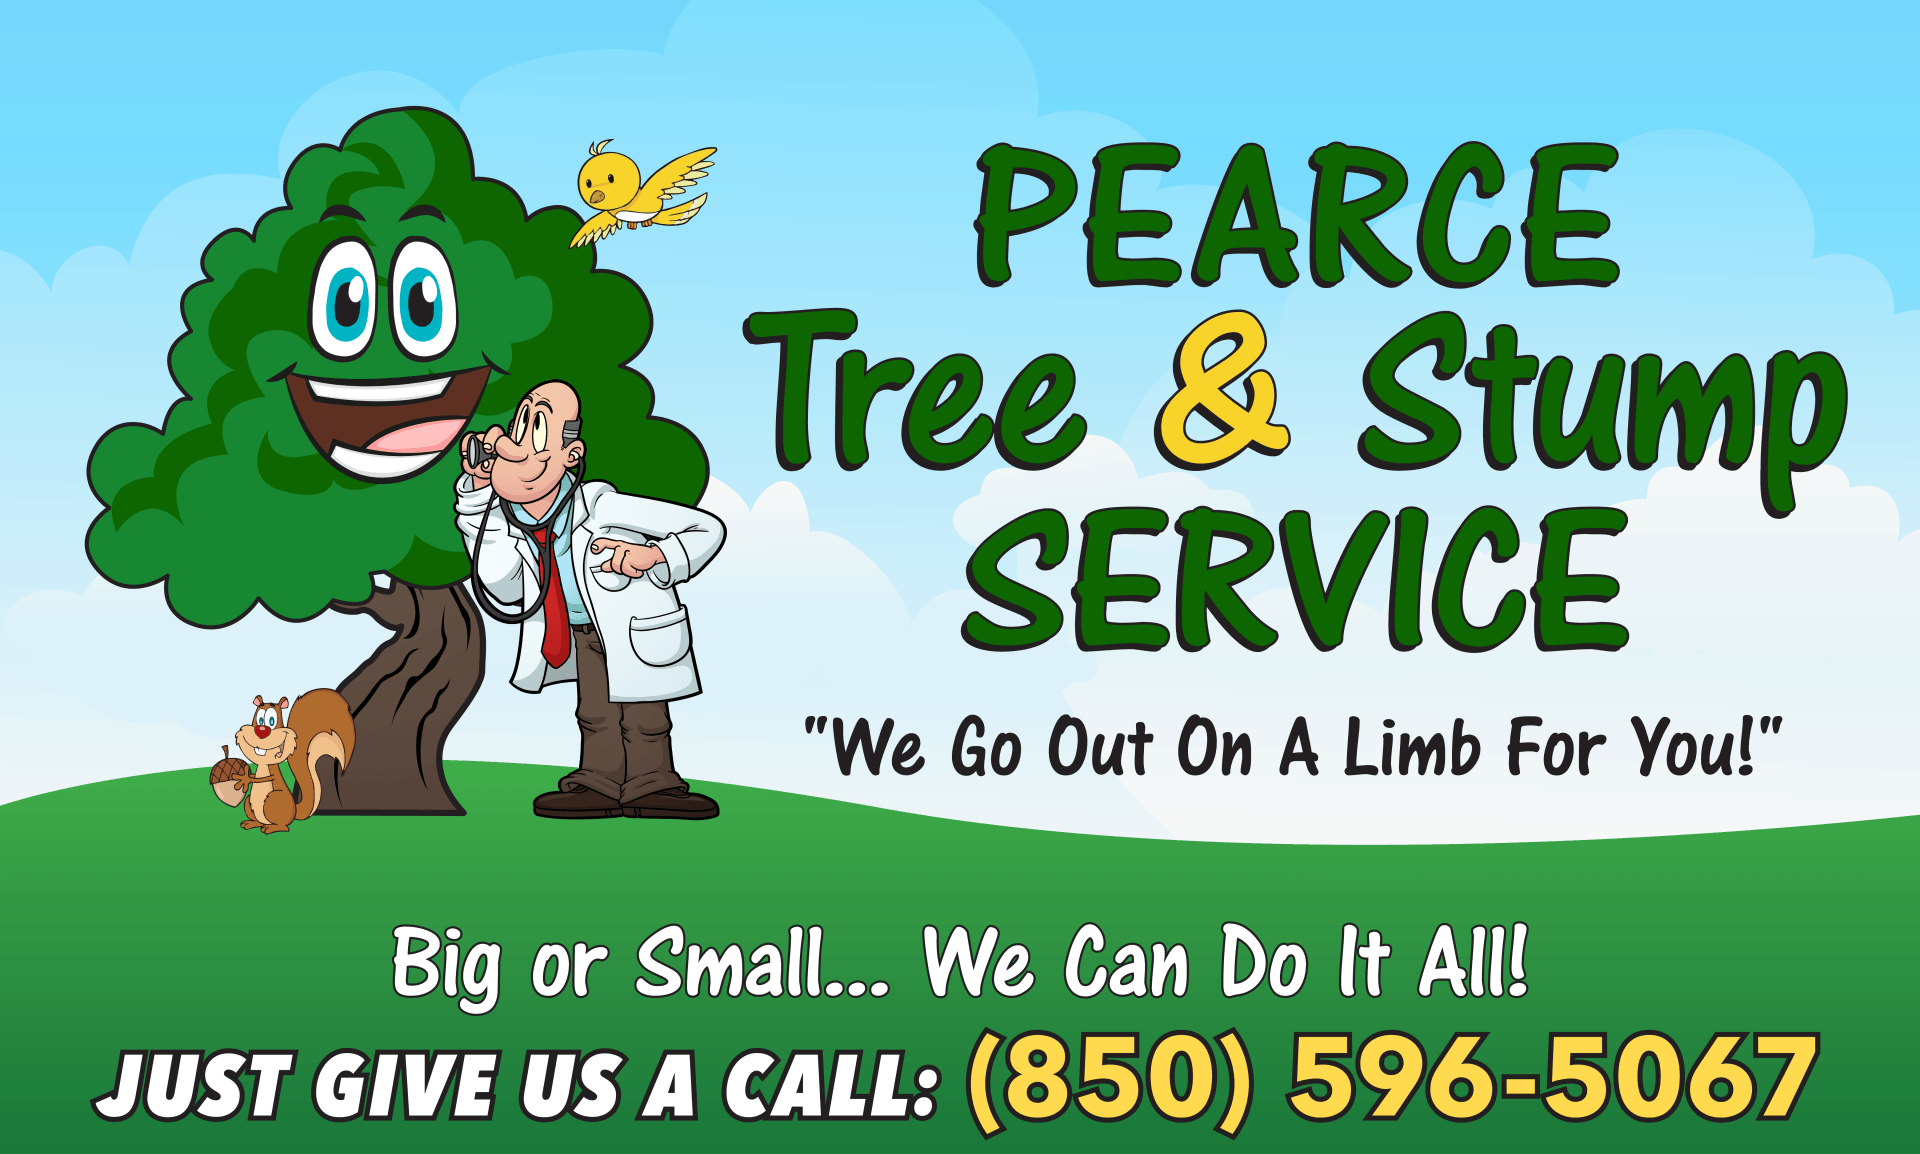 Tree Service in Panama City Beach, FL | Pearce Tree & Stump Service